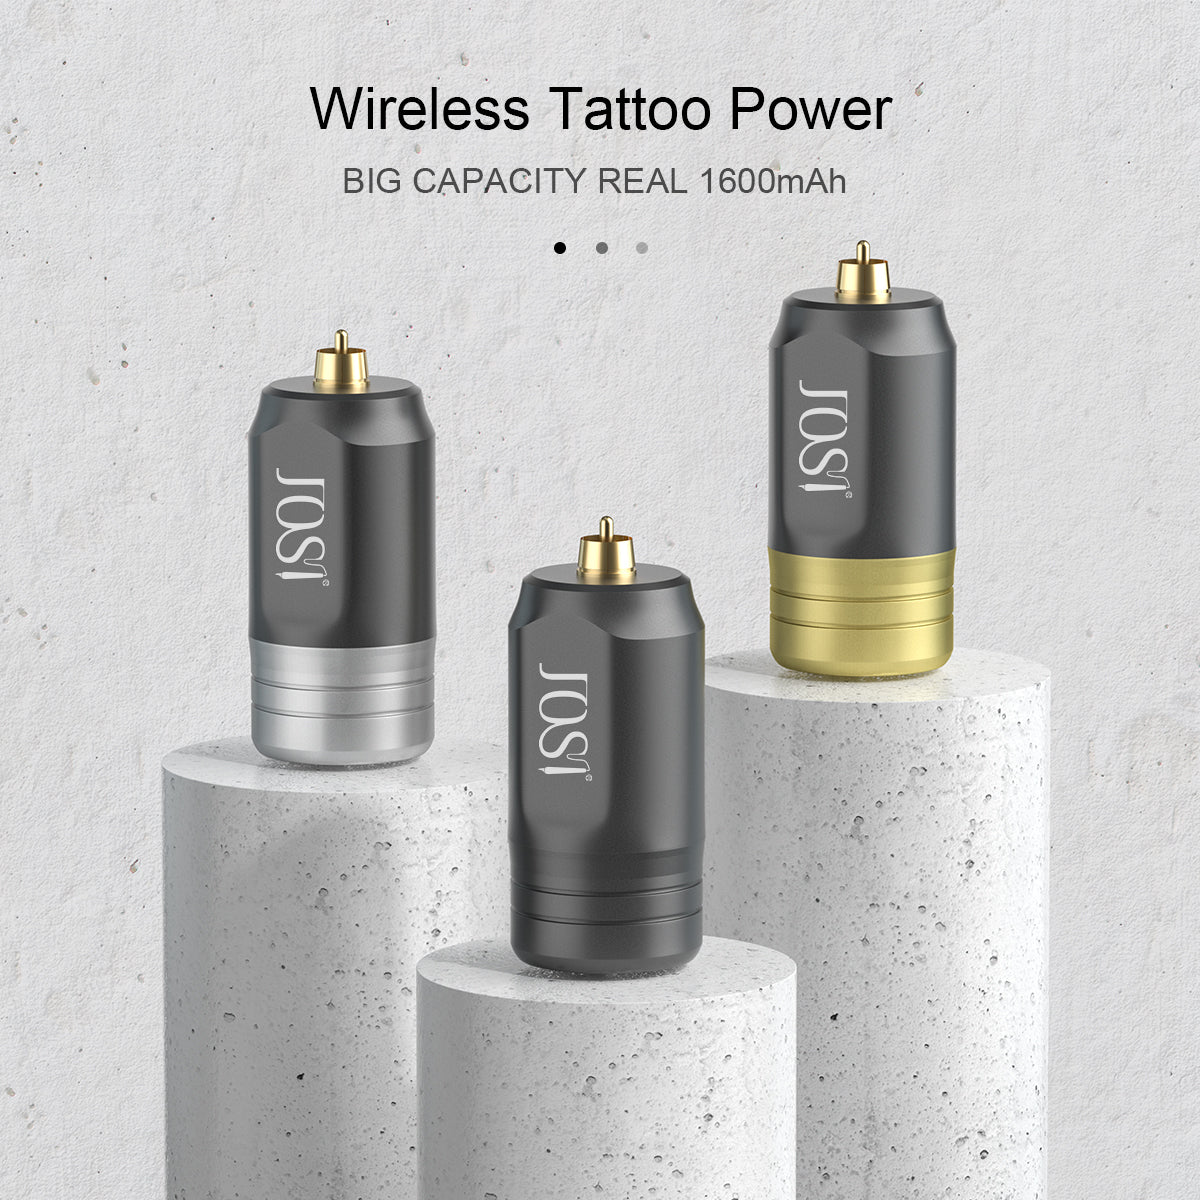 JOSI WP6 Wireless Tattoo Power Supply Rechargeable Battery 1600mAh